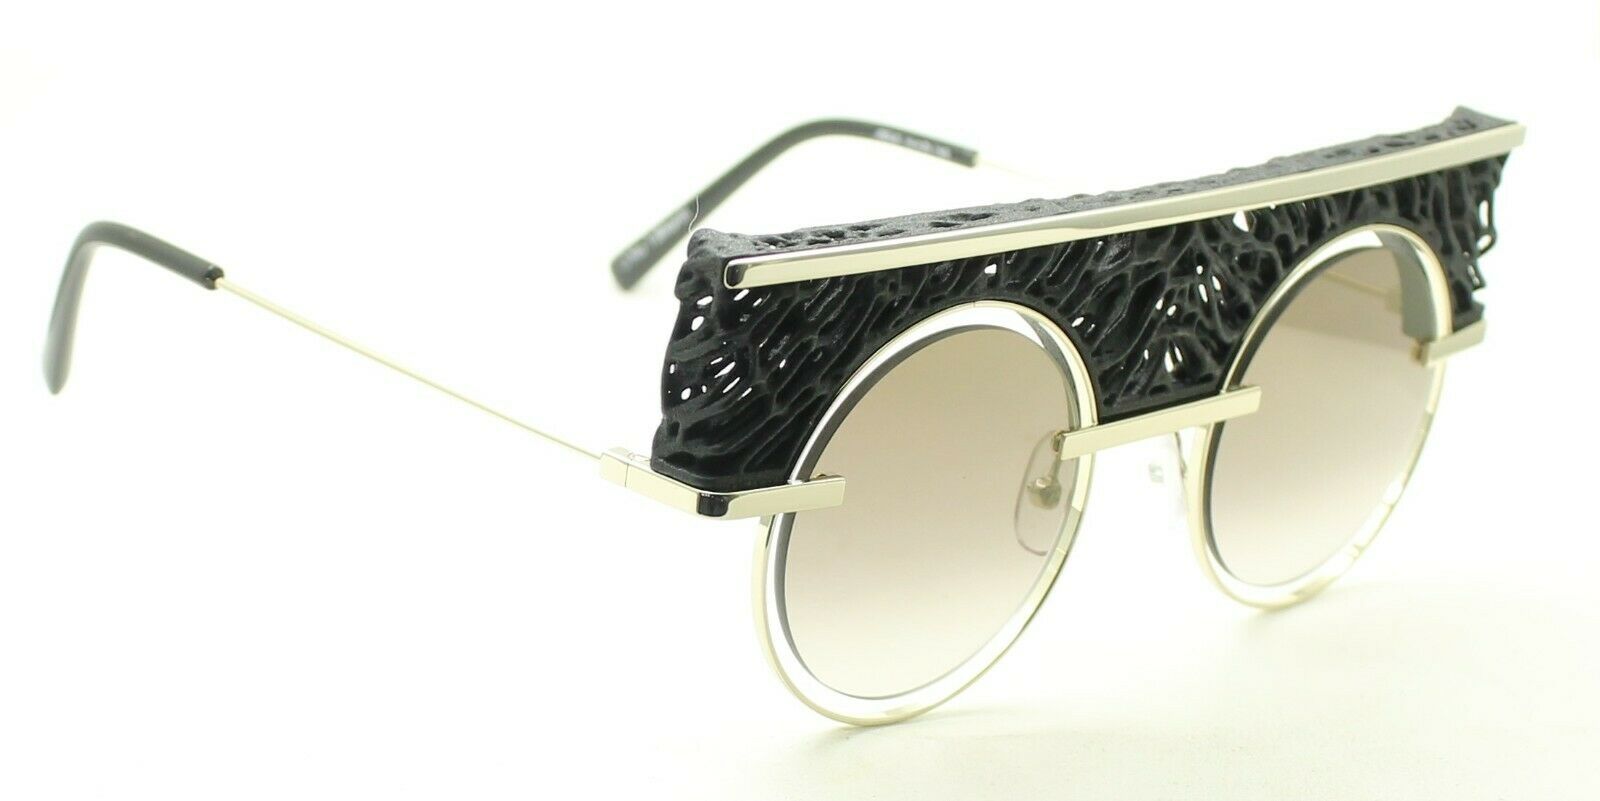 OXYDO LIMITED EDITION Francis Bitonti No. 1 J5G Gold Sunglasses Shades Eyewear